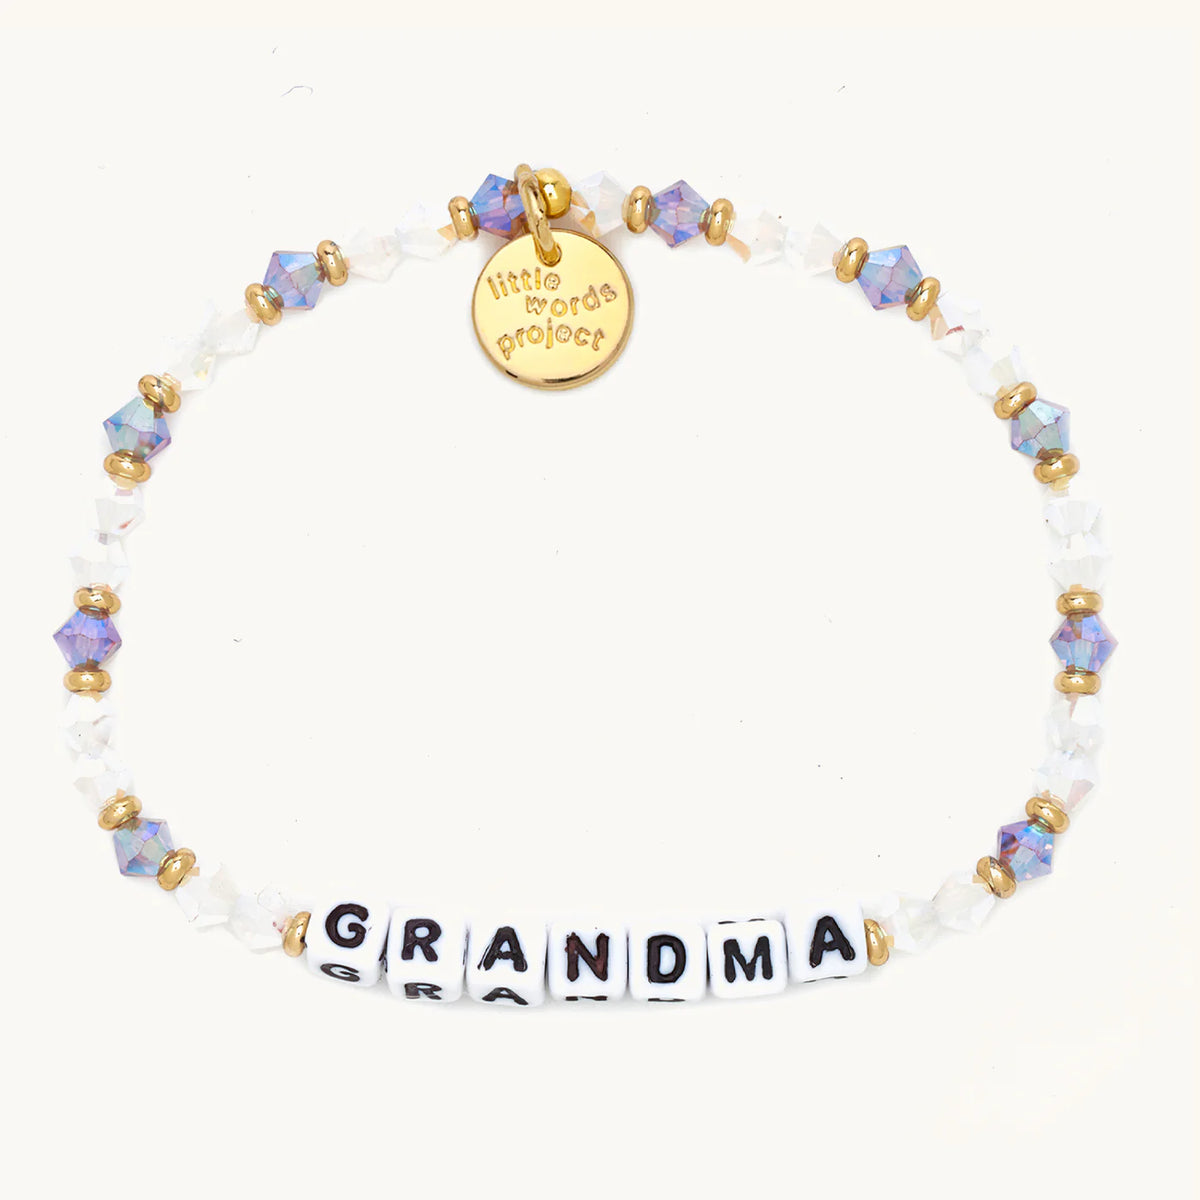 Little Words Project - Grandma